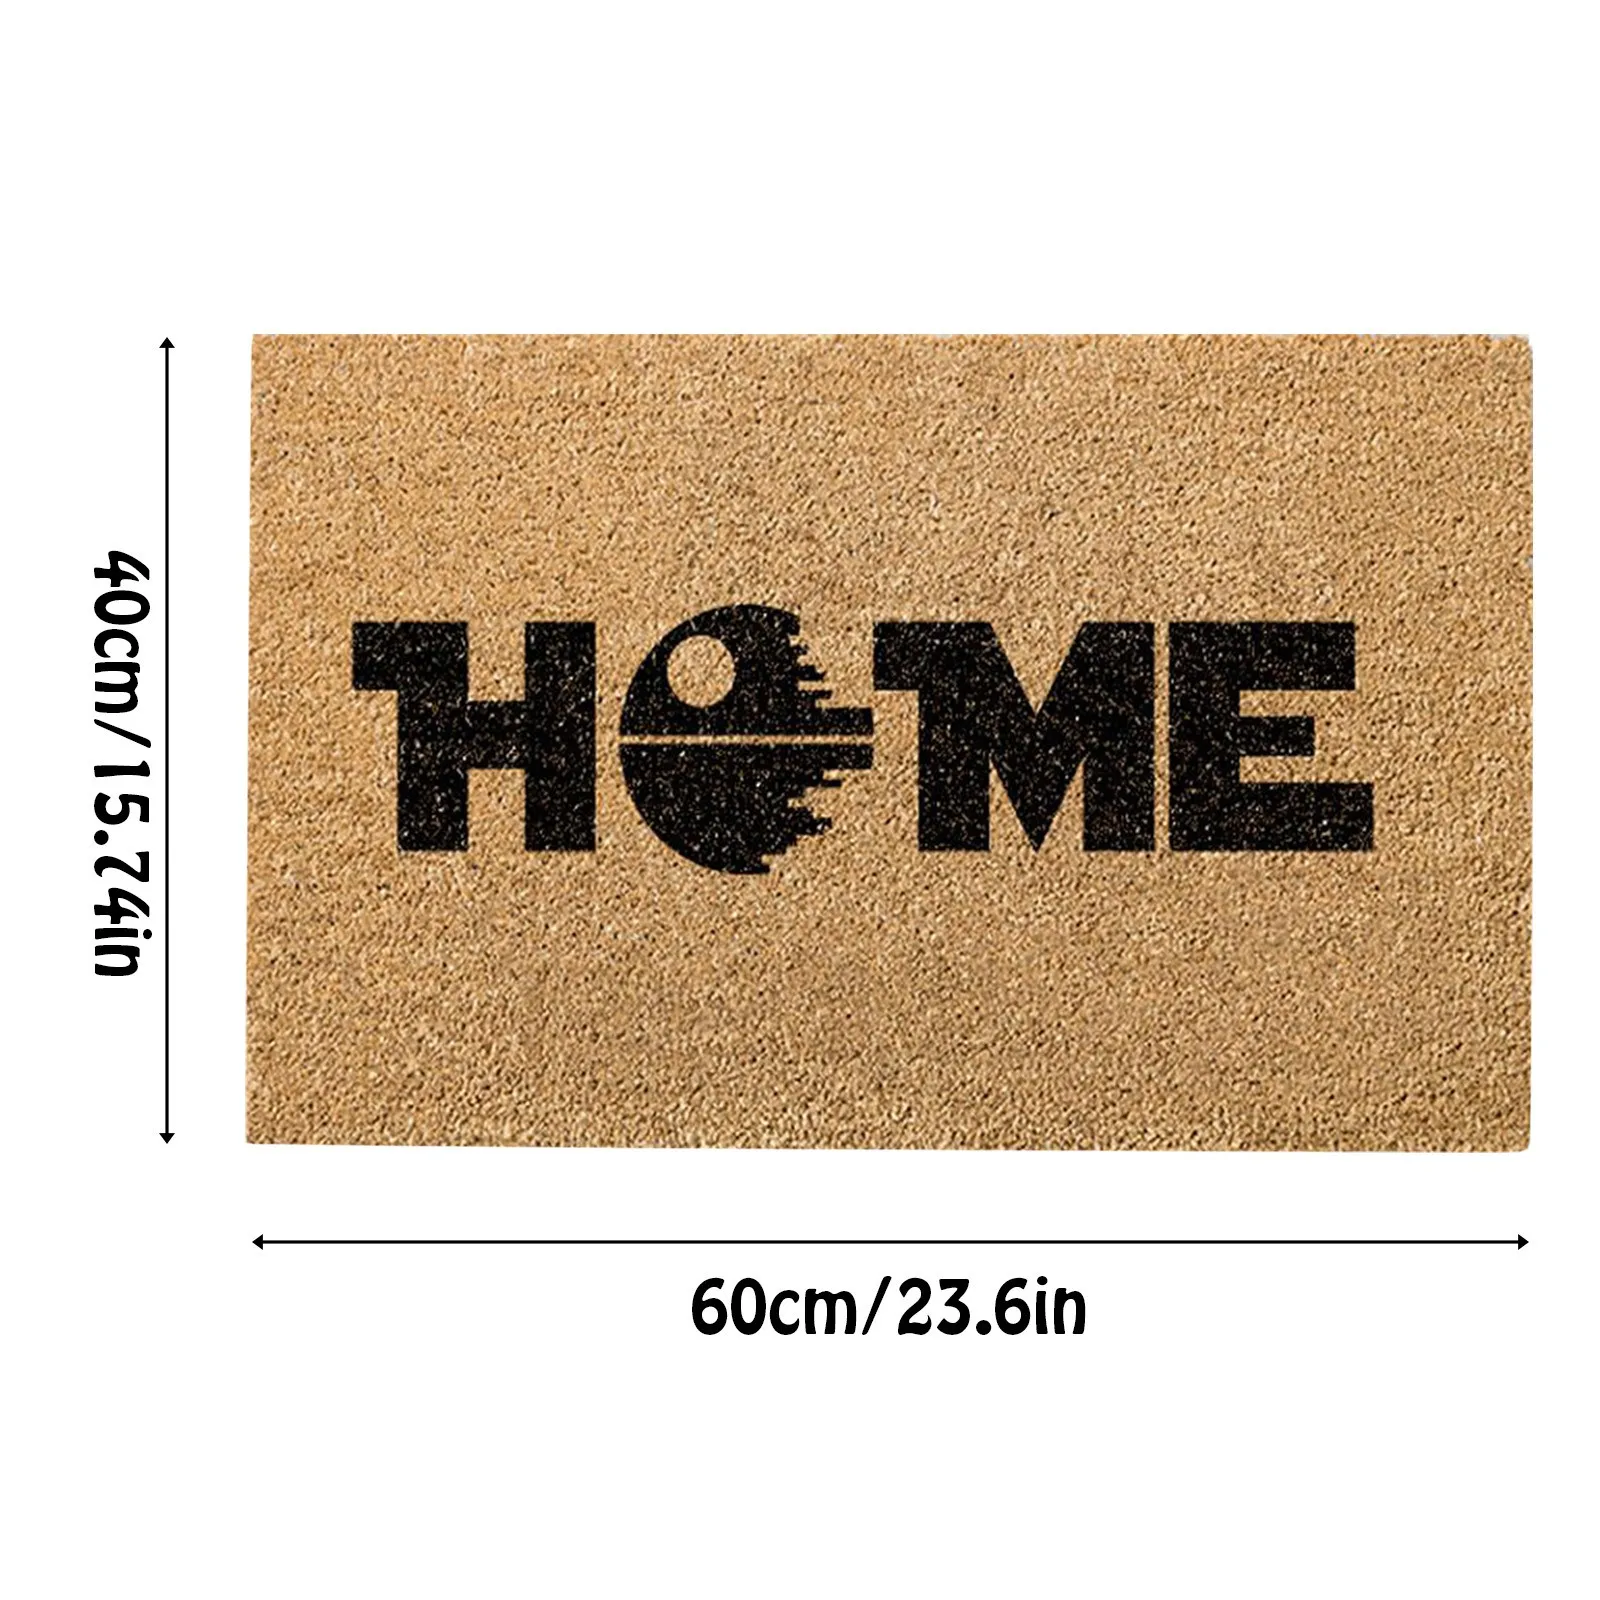 

40x60cm Entrance Welcome Doormat Absorbent Bathroom Kitchen Floor Mat Home Letter Rug Anti-Slip Carpet For Living Room